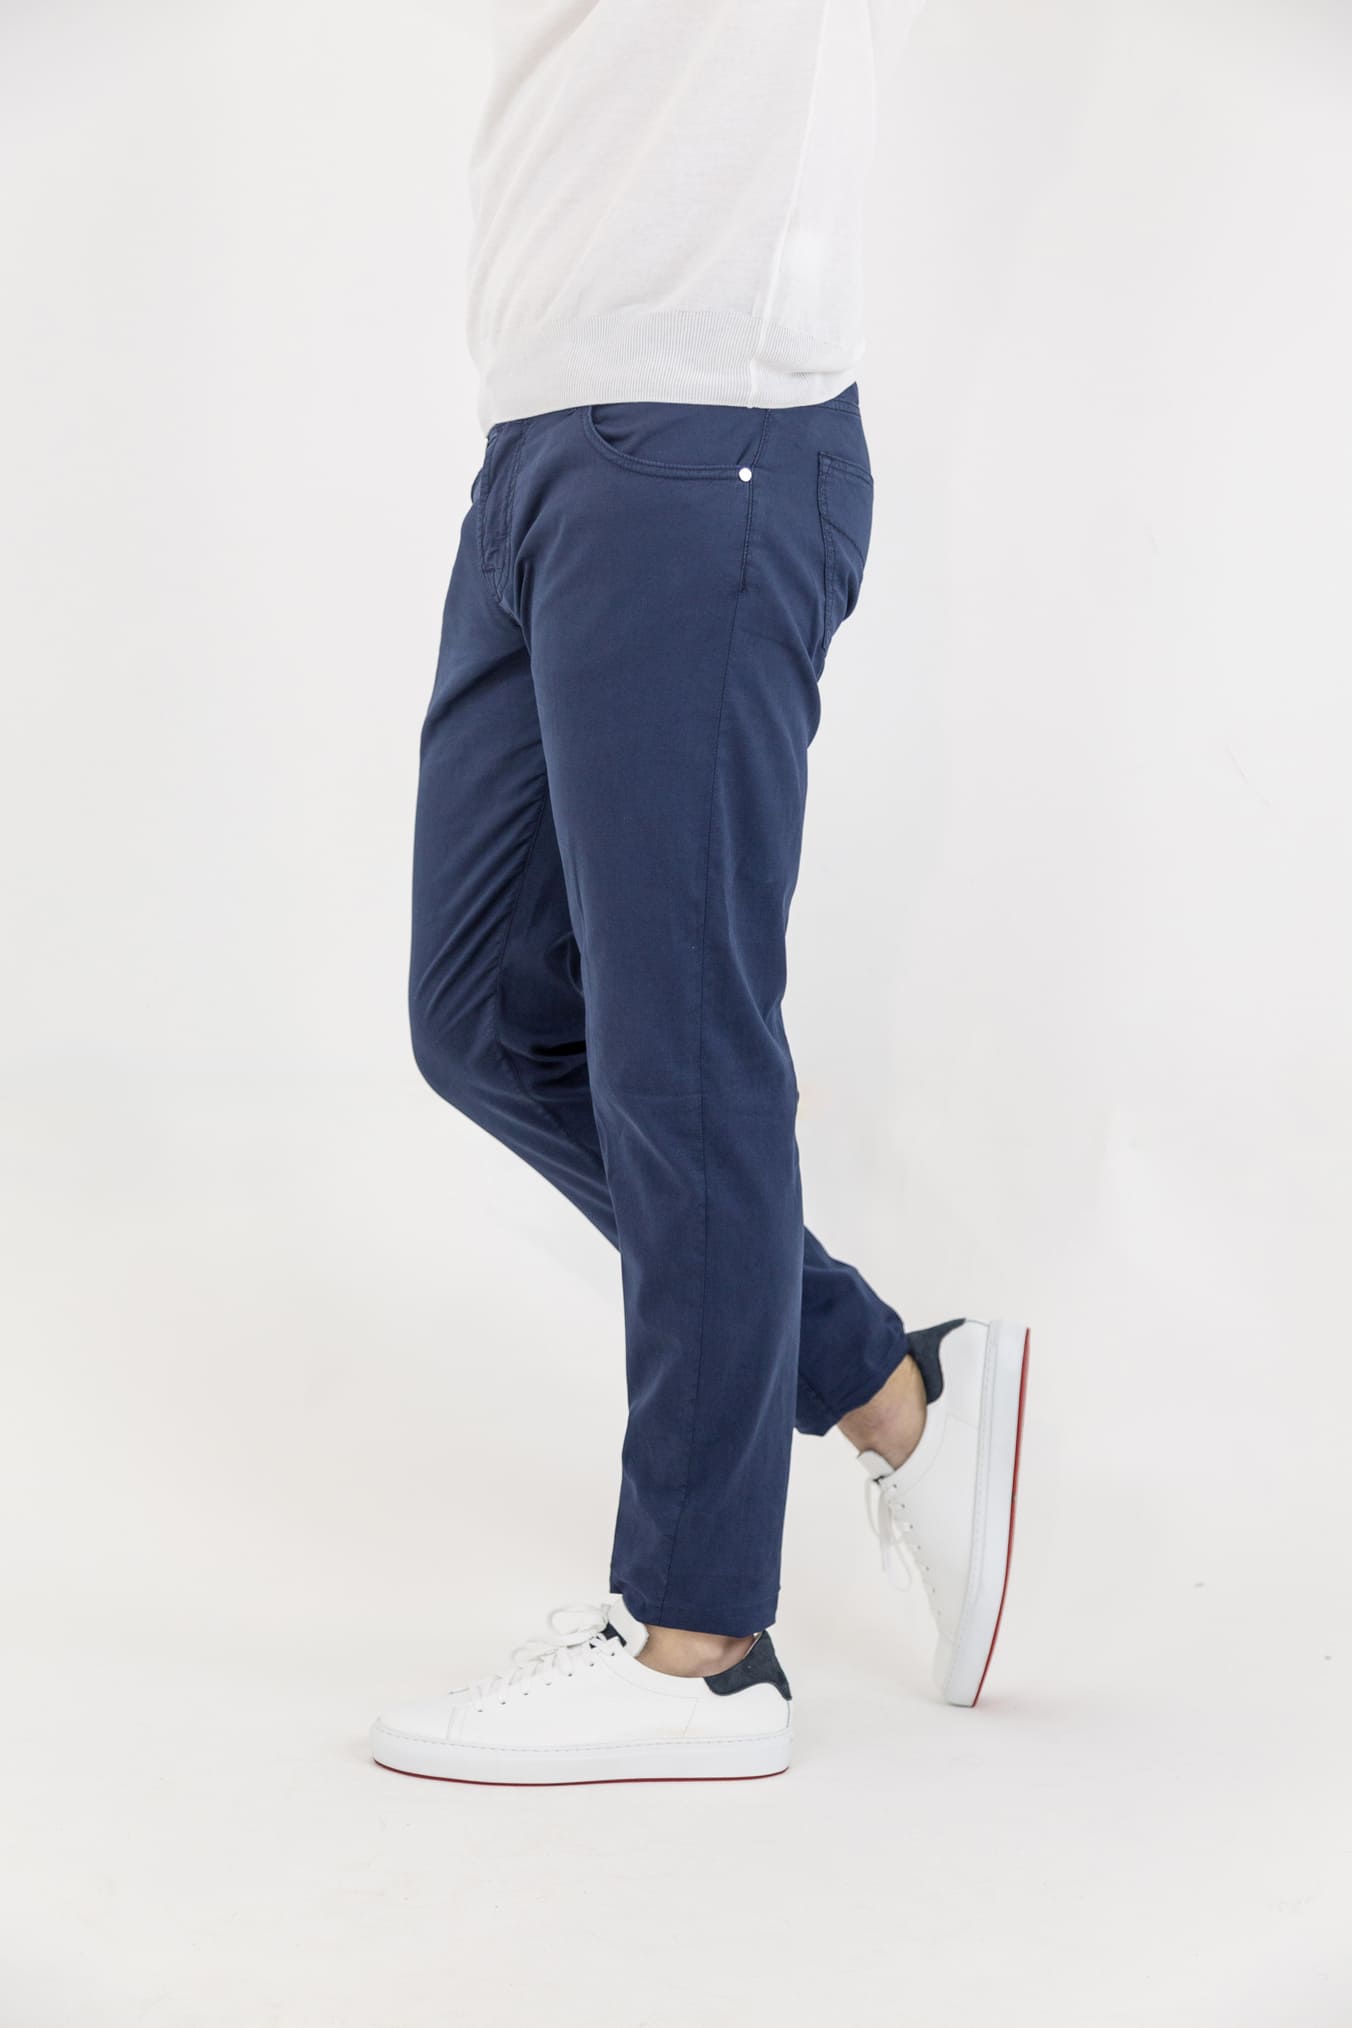 PESCAROLO Pantaloni 5 Tasche mod. Nerano Cotone Seta Blu Navy